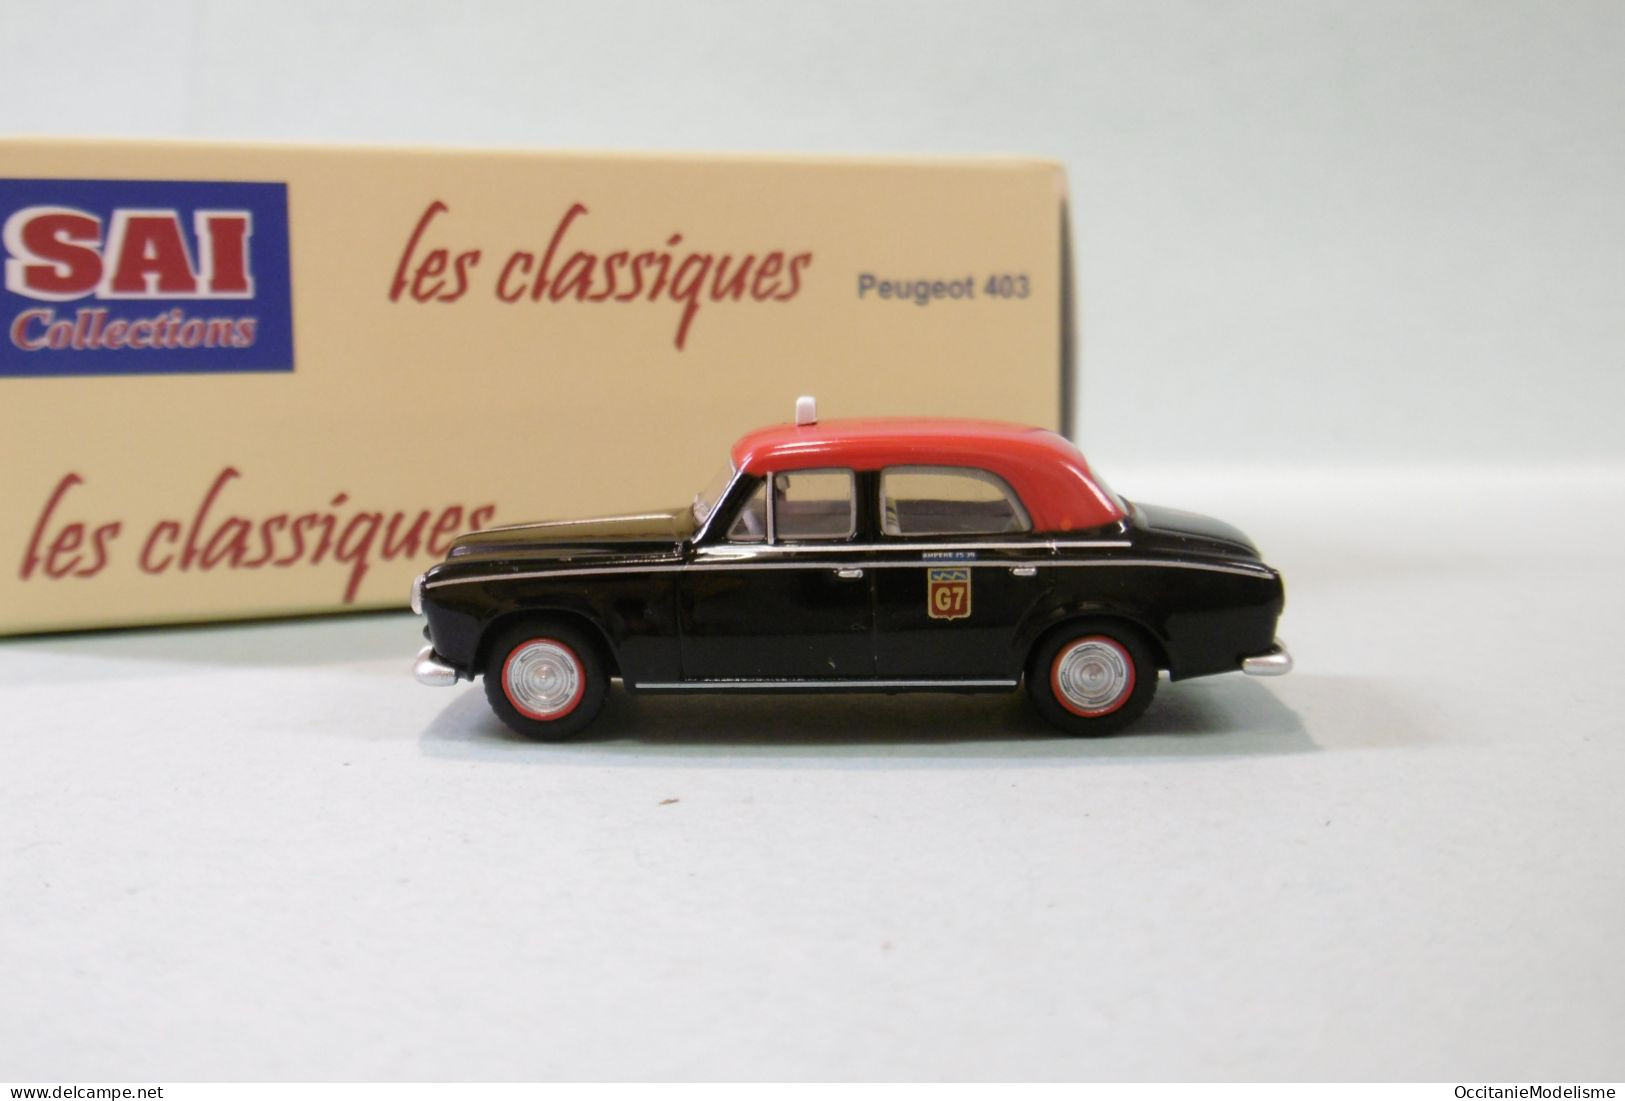 SAI Les Classiques - PEUGEOT 403 7 Taxi G7 1960 Réf. 6241 Neuf NBO HO 1/87 - Road Vehicles